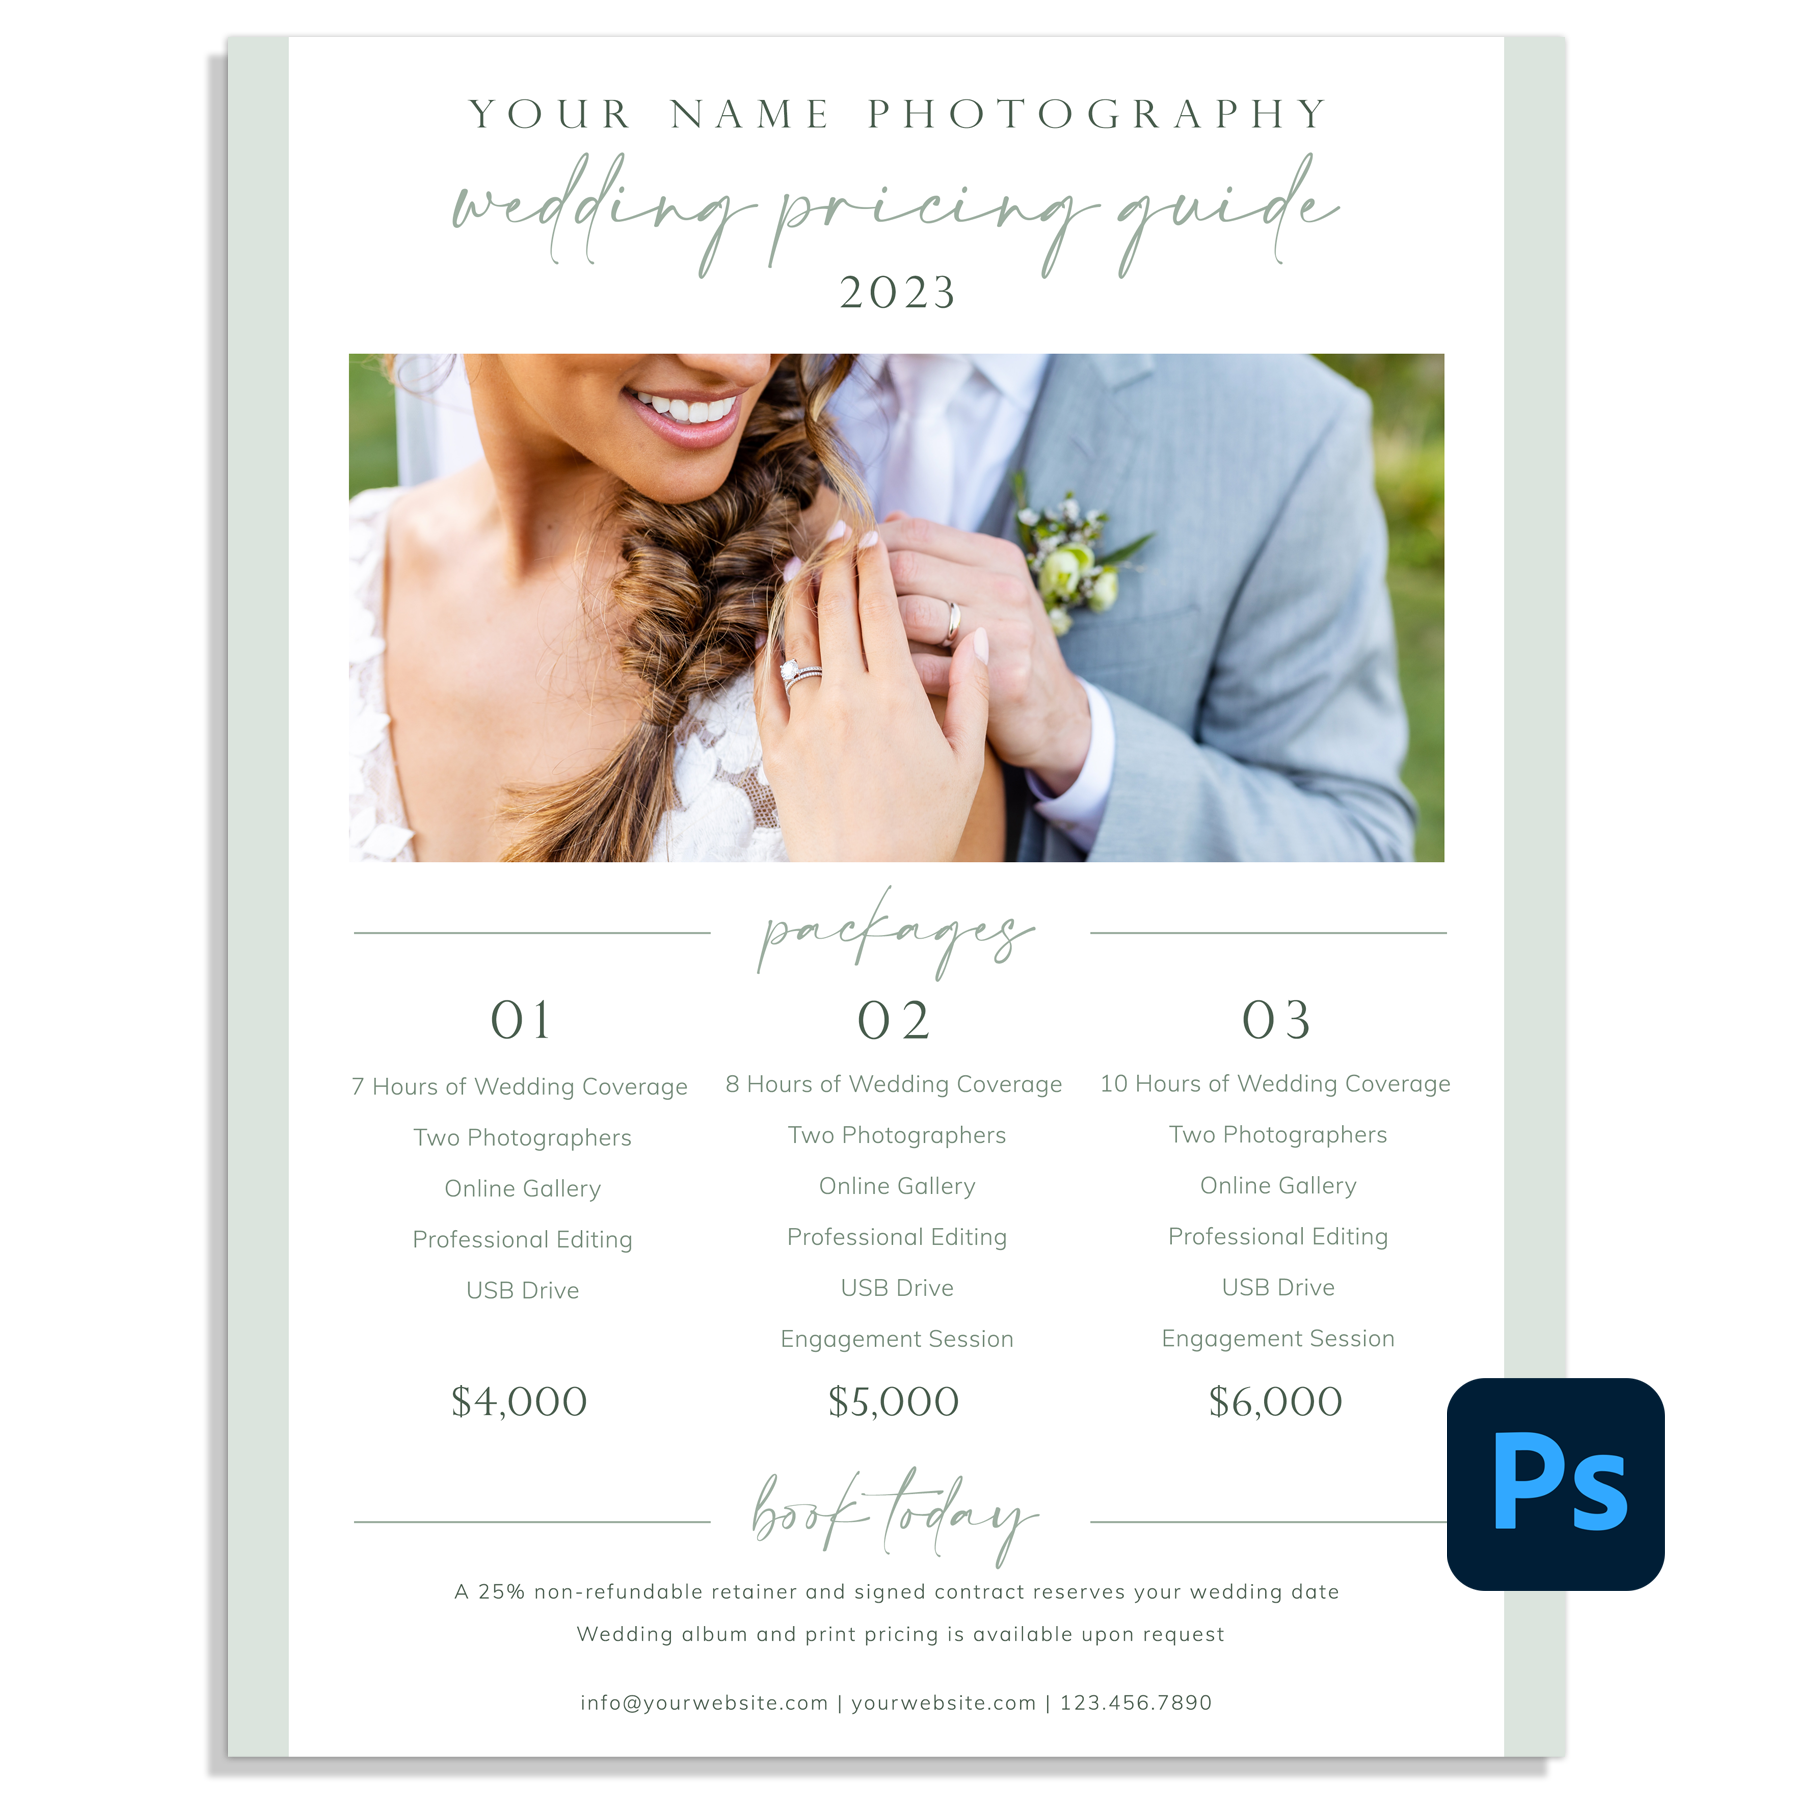 wedding photography price list template